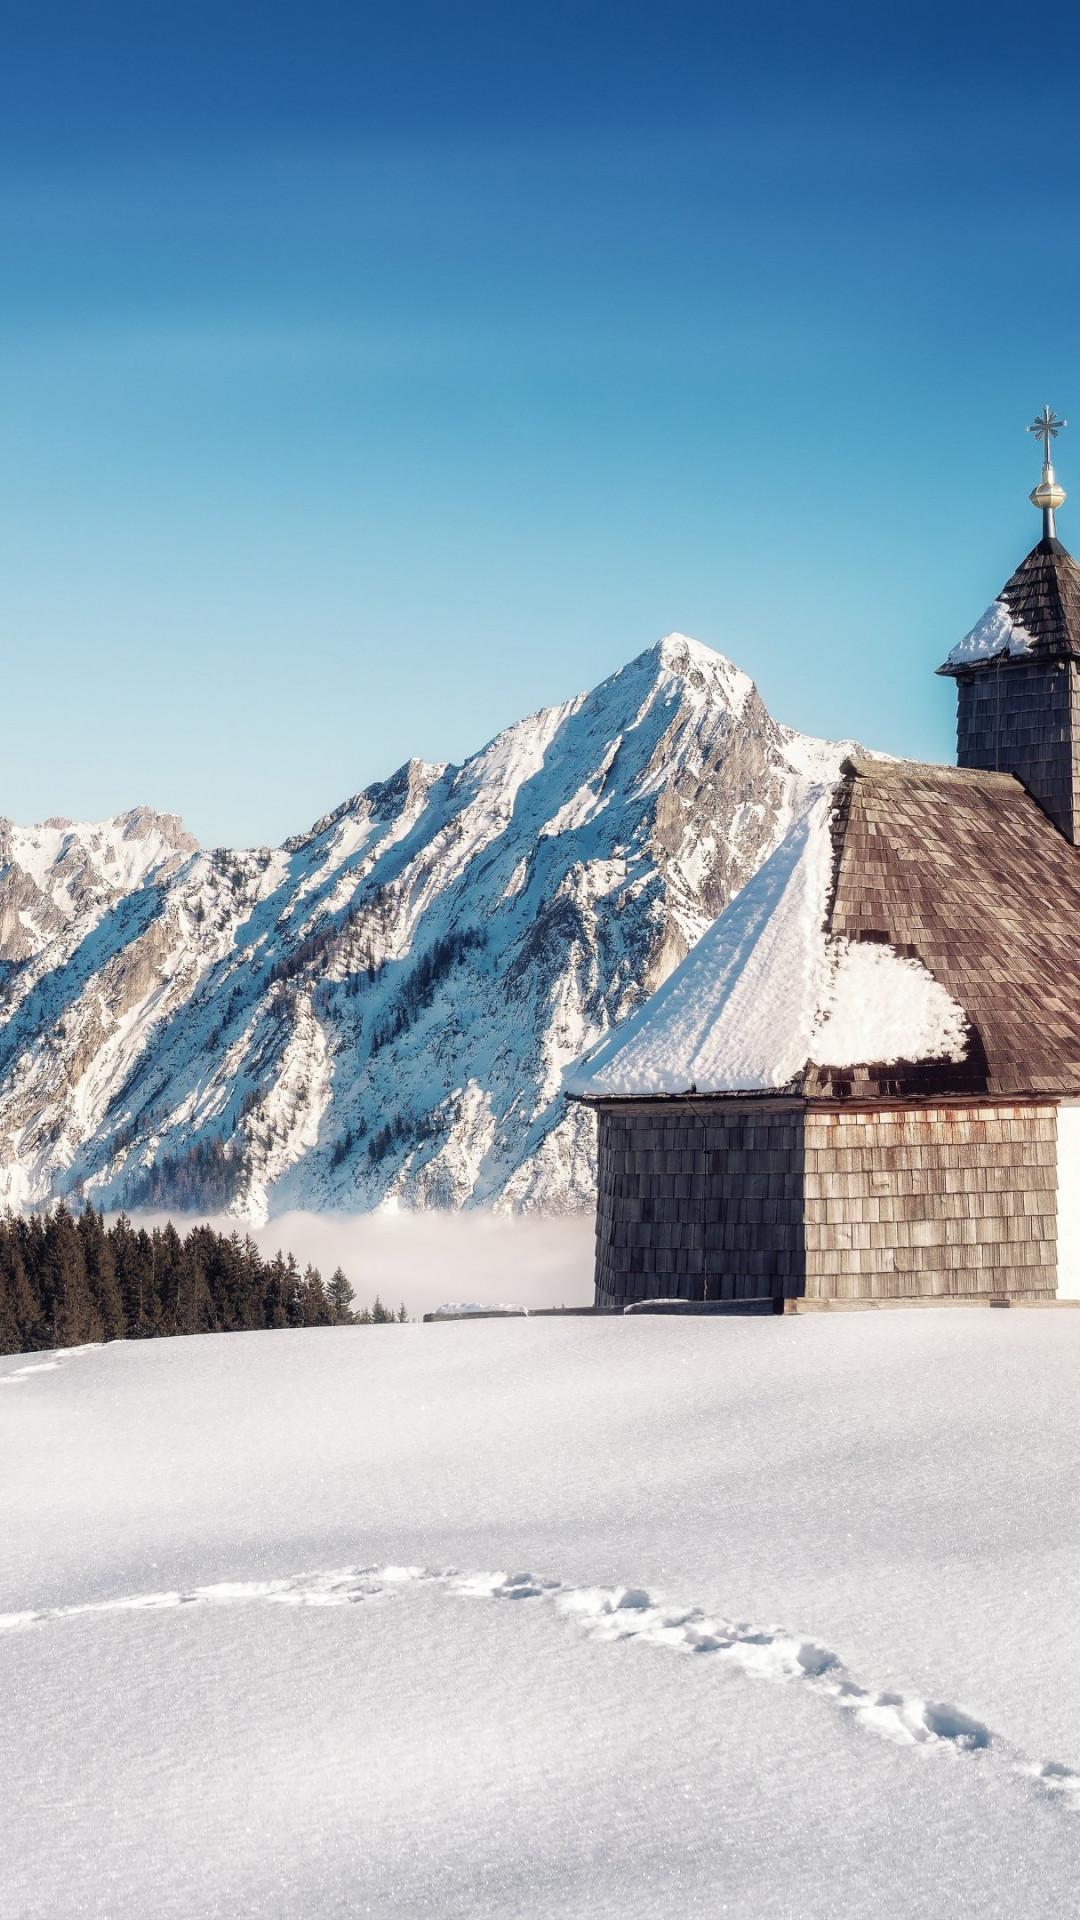 Download wallpaper: Alpine Winter landscape from Strobl